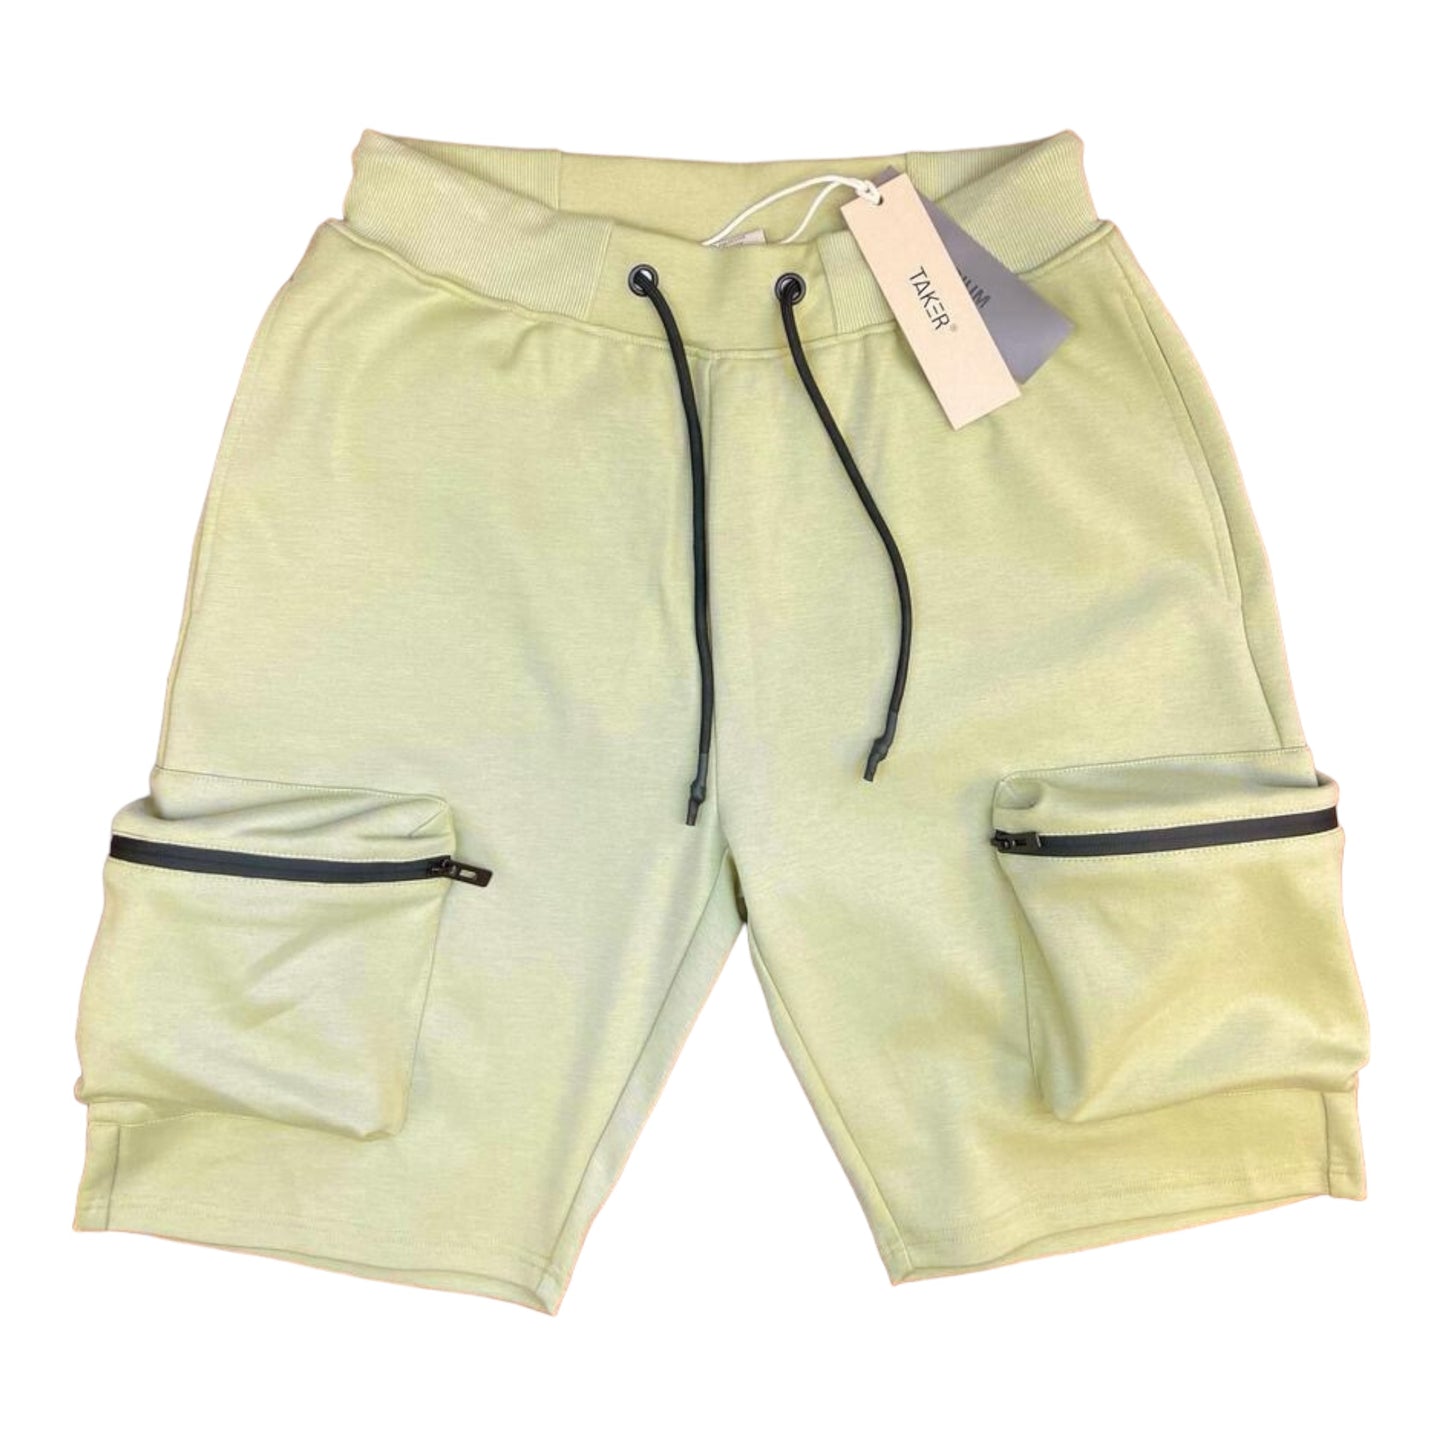 TAKER: Stretch Cargo Fleece Shorts SB2003